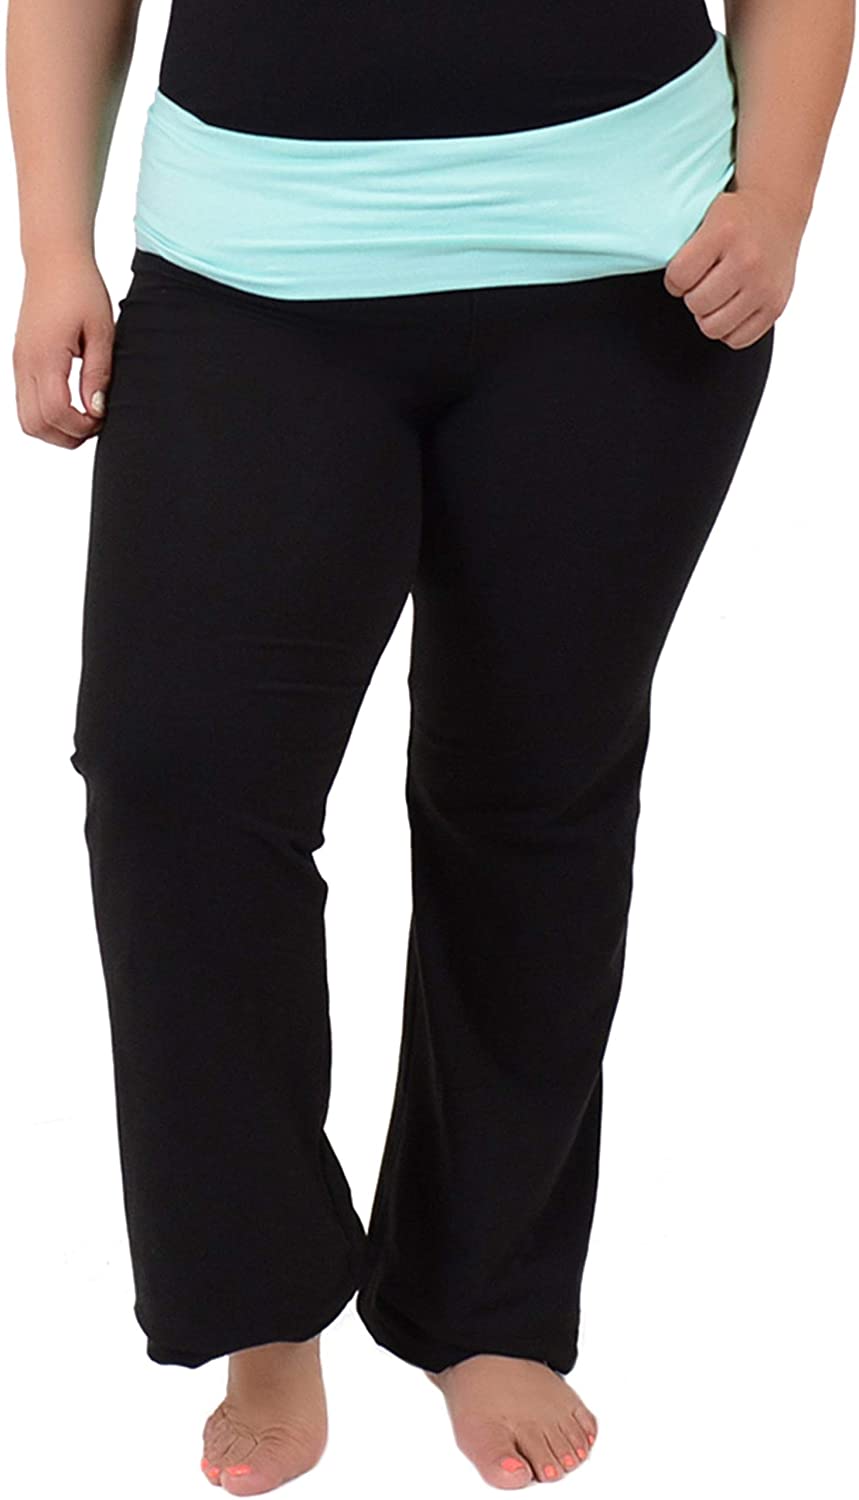 Stretch is Comfort Women's Foldover Plus Size Yoga Pants XL-7XL